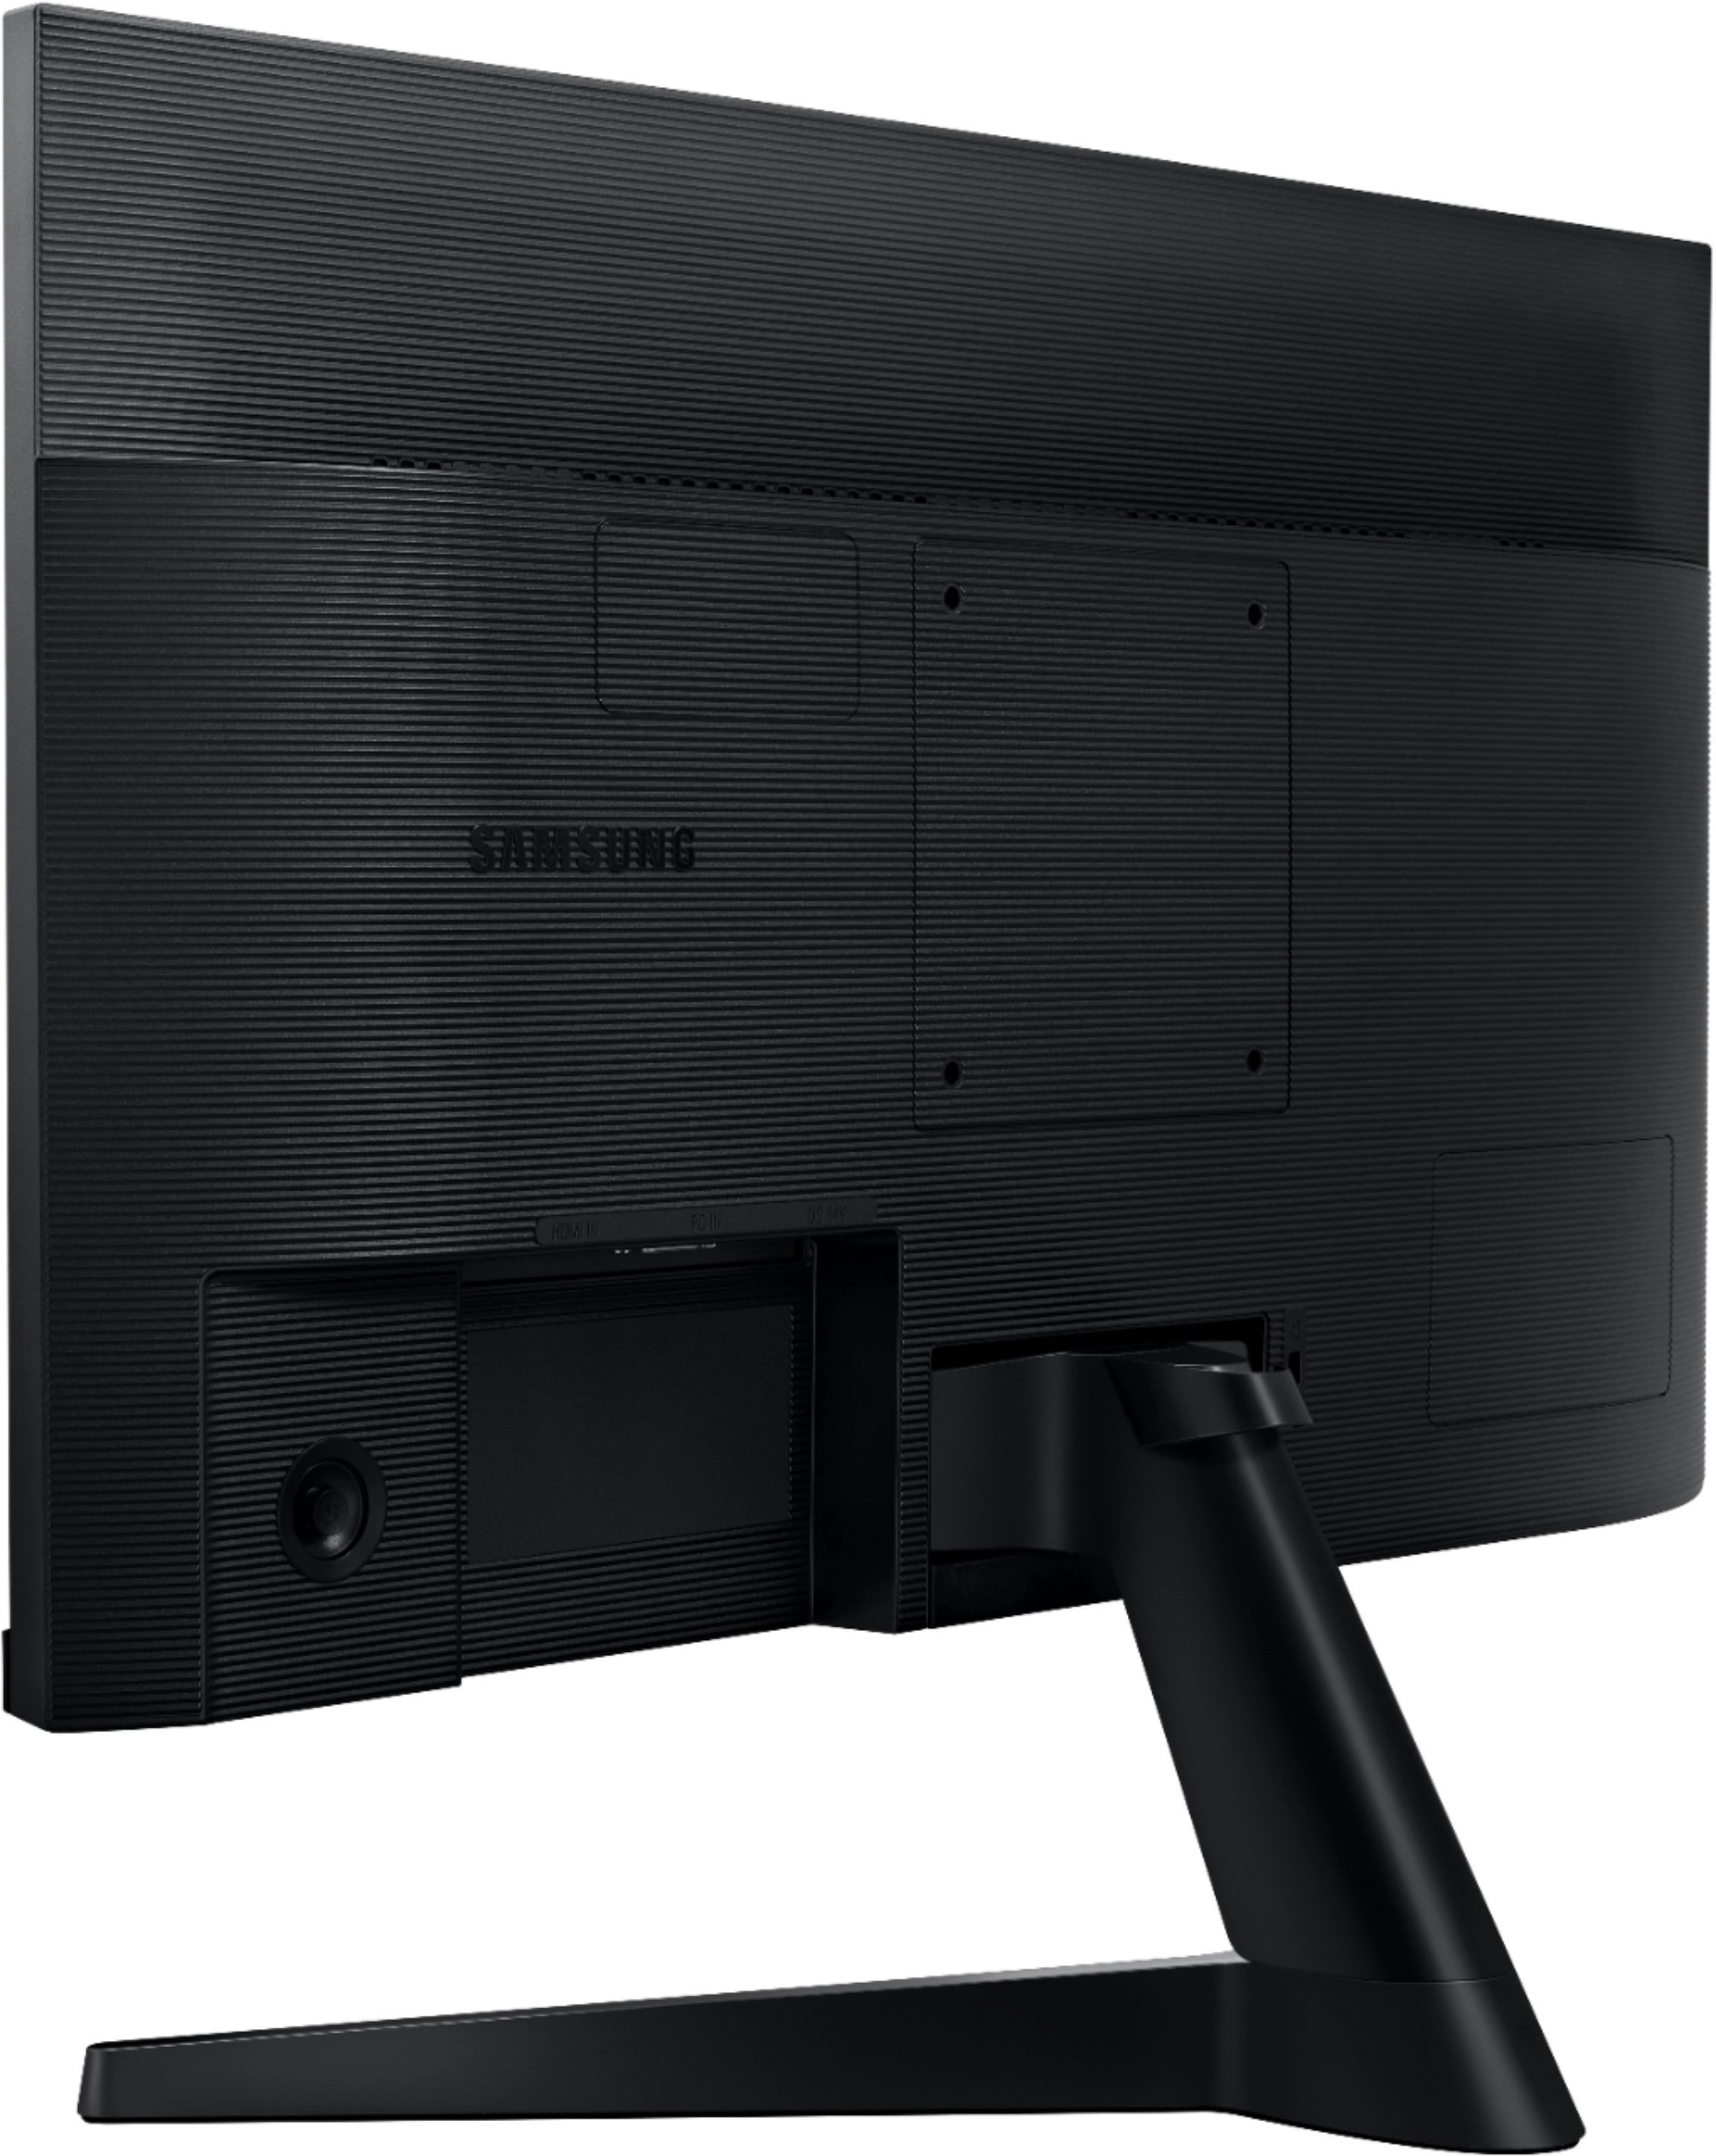 Samsung 24 LED Monitor with Borderless Design in Dark Blue Grey